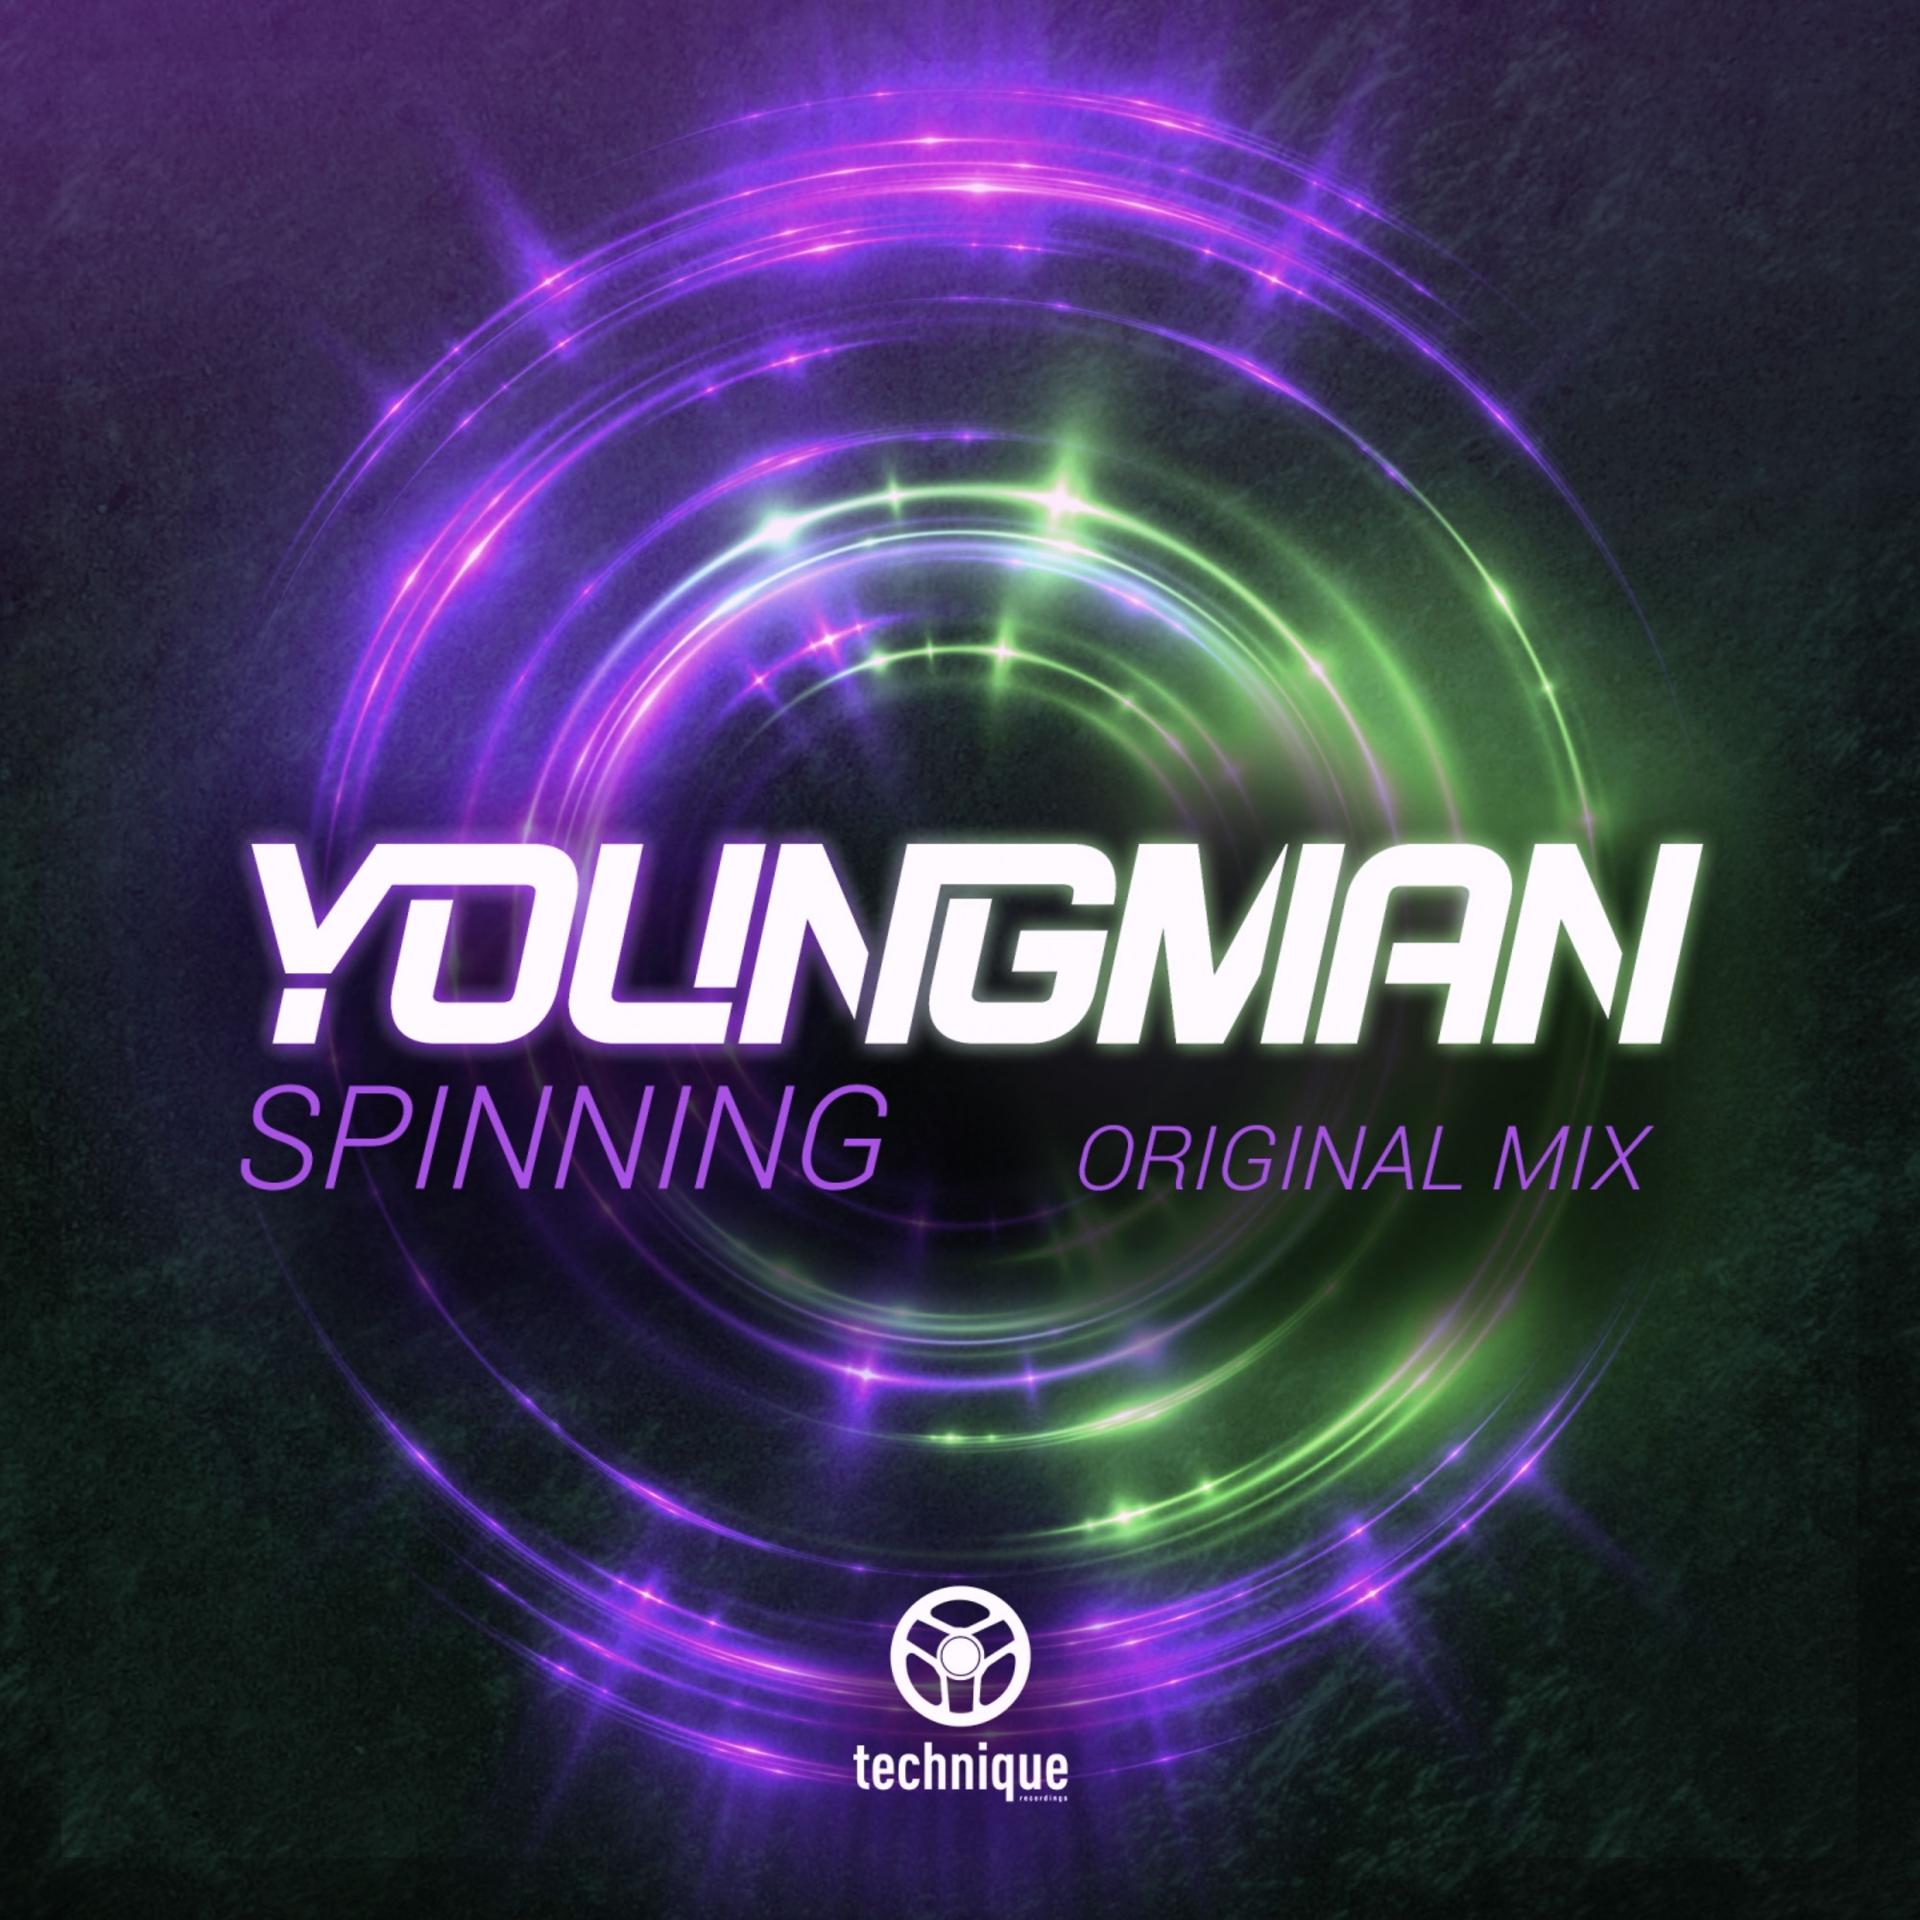 Spinning man. Spin музыка. World is Spinning мелодия. Technique recordings. Youngman песня.